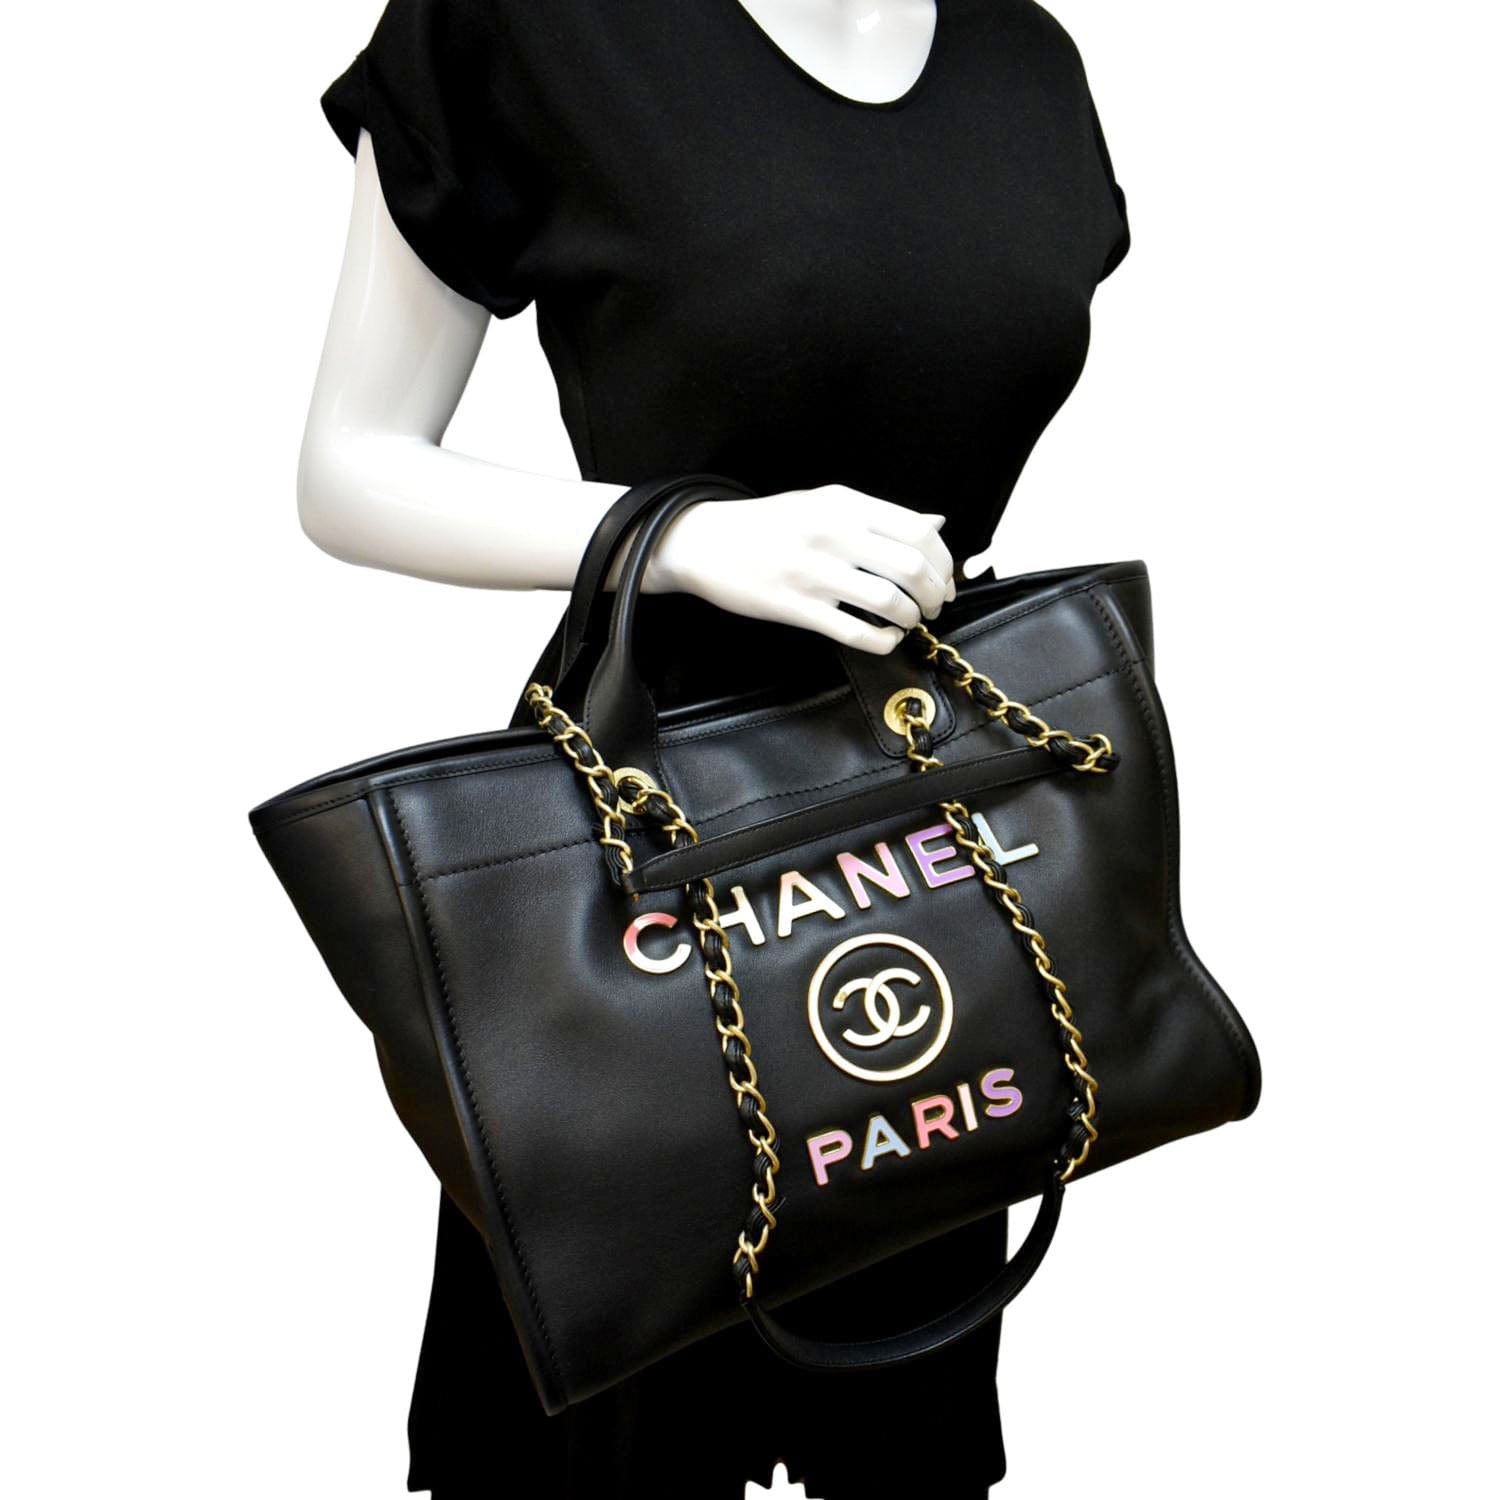 Chanel Medium Deauville Tote - Totes, Handbags